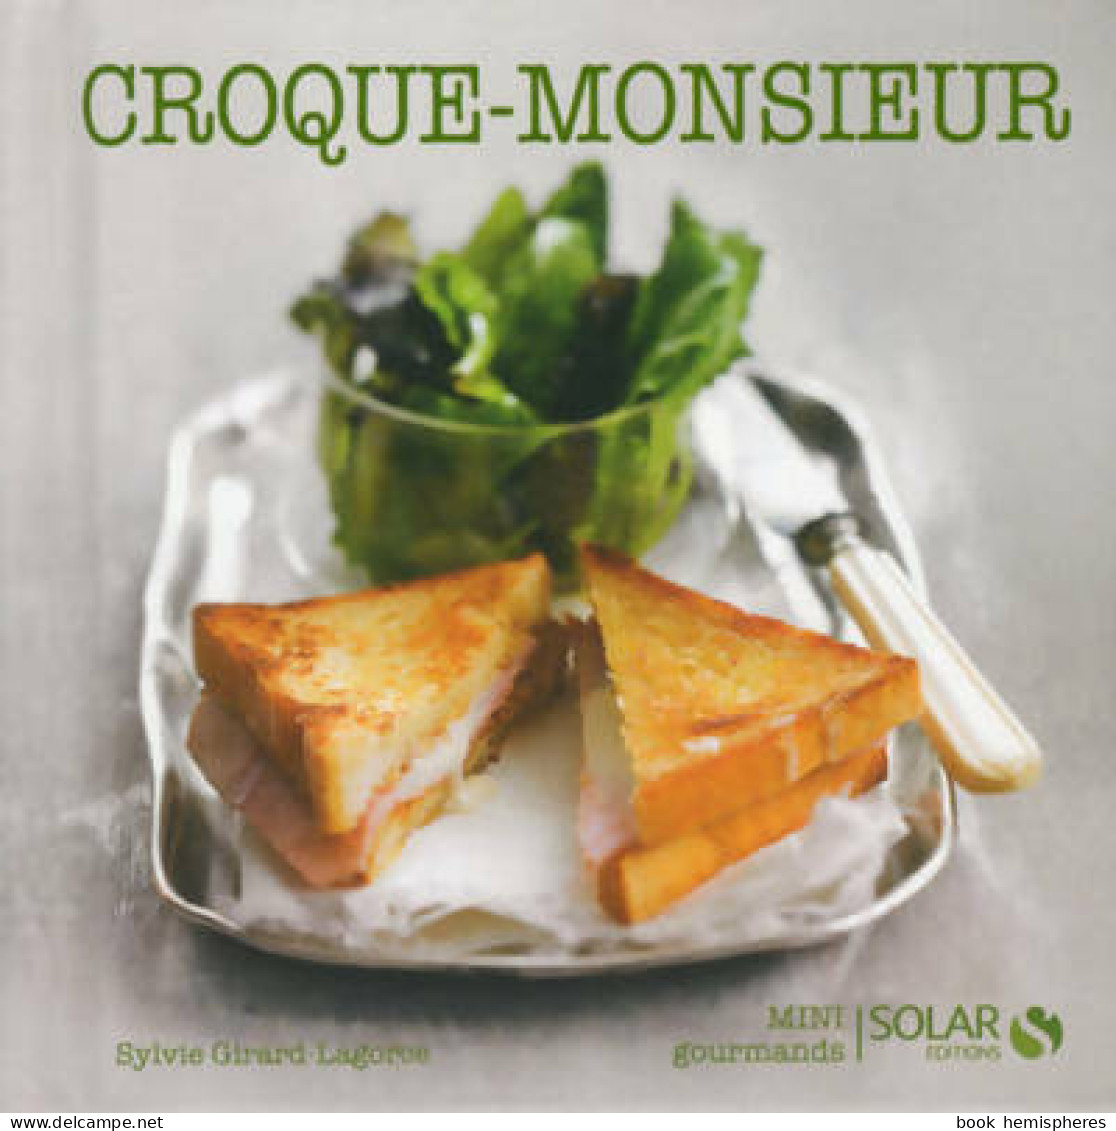 Croque-monsieur (2013) De Sylvie Girard-Lagorce - Gastronomie